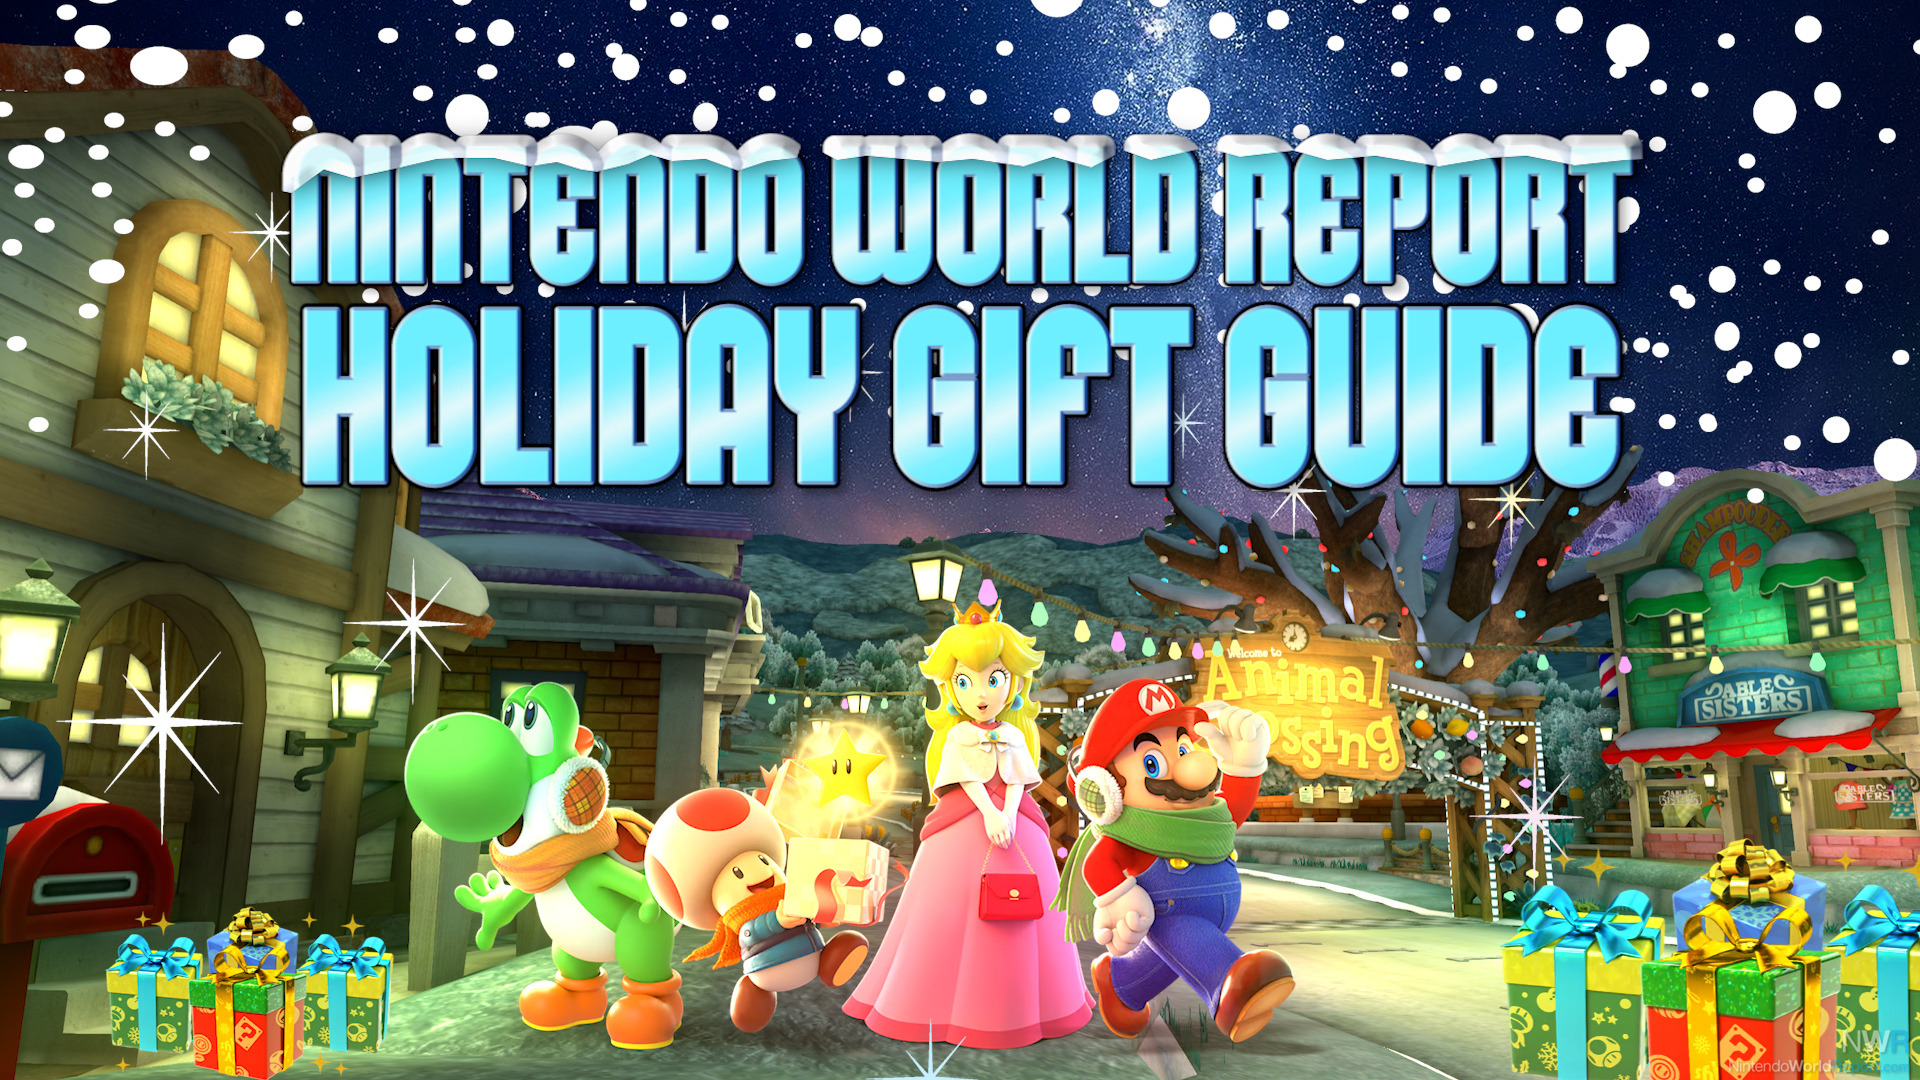 Nintendo Gift Guide